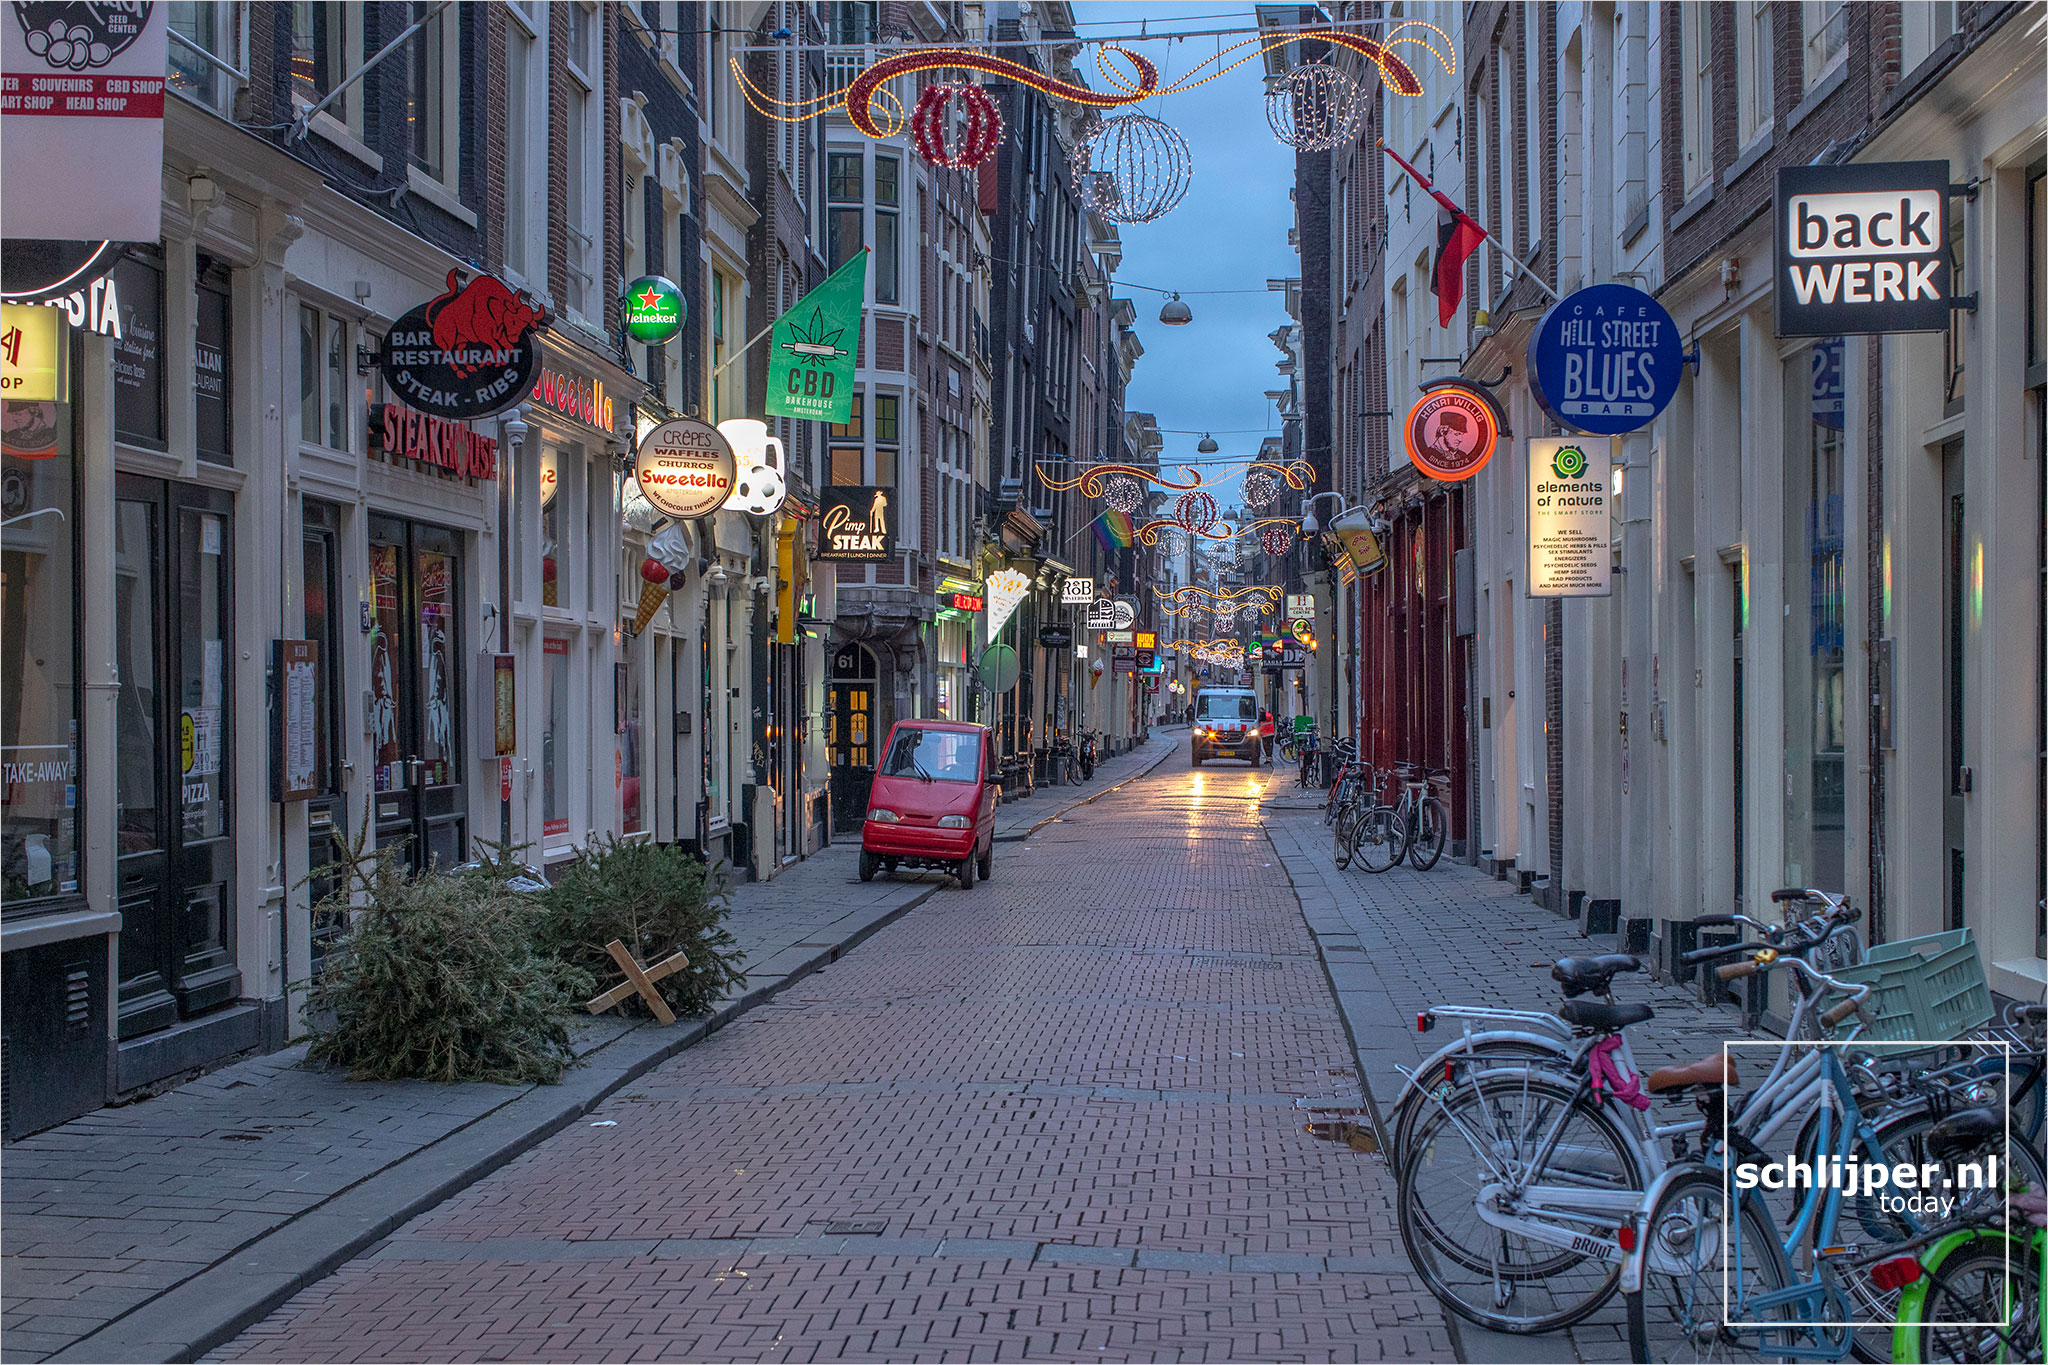 The Netherlands, Amsterdam, 4 januari 2021